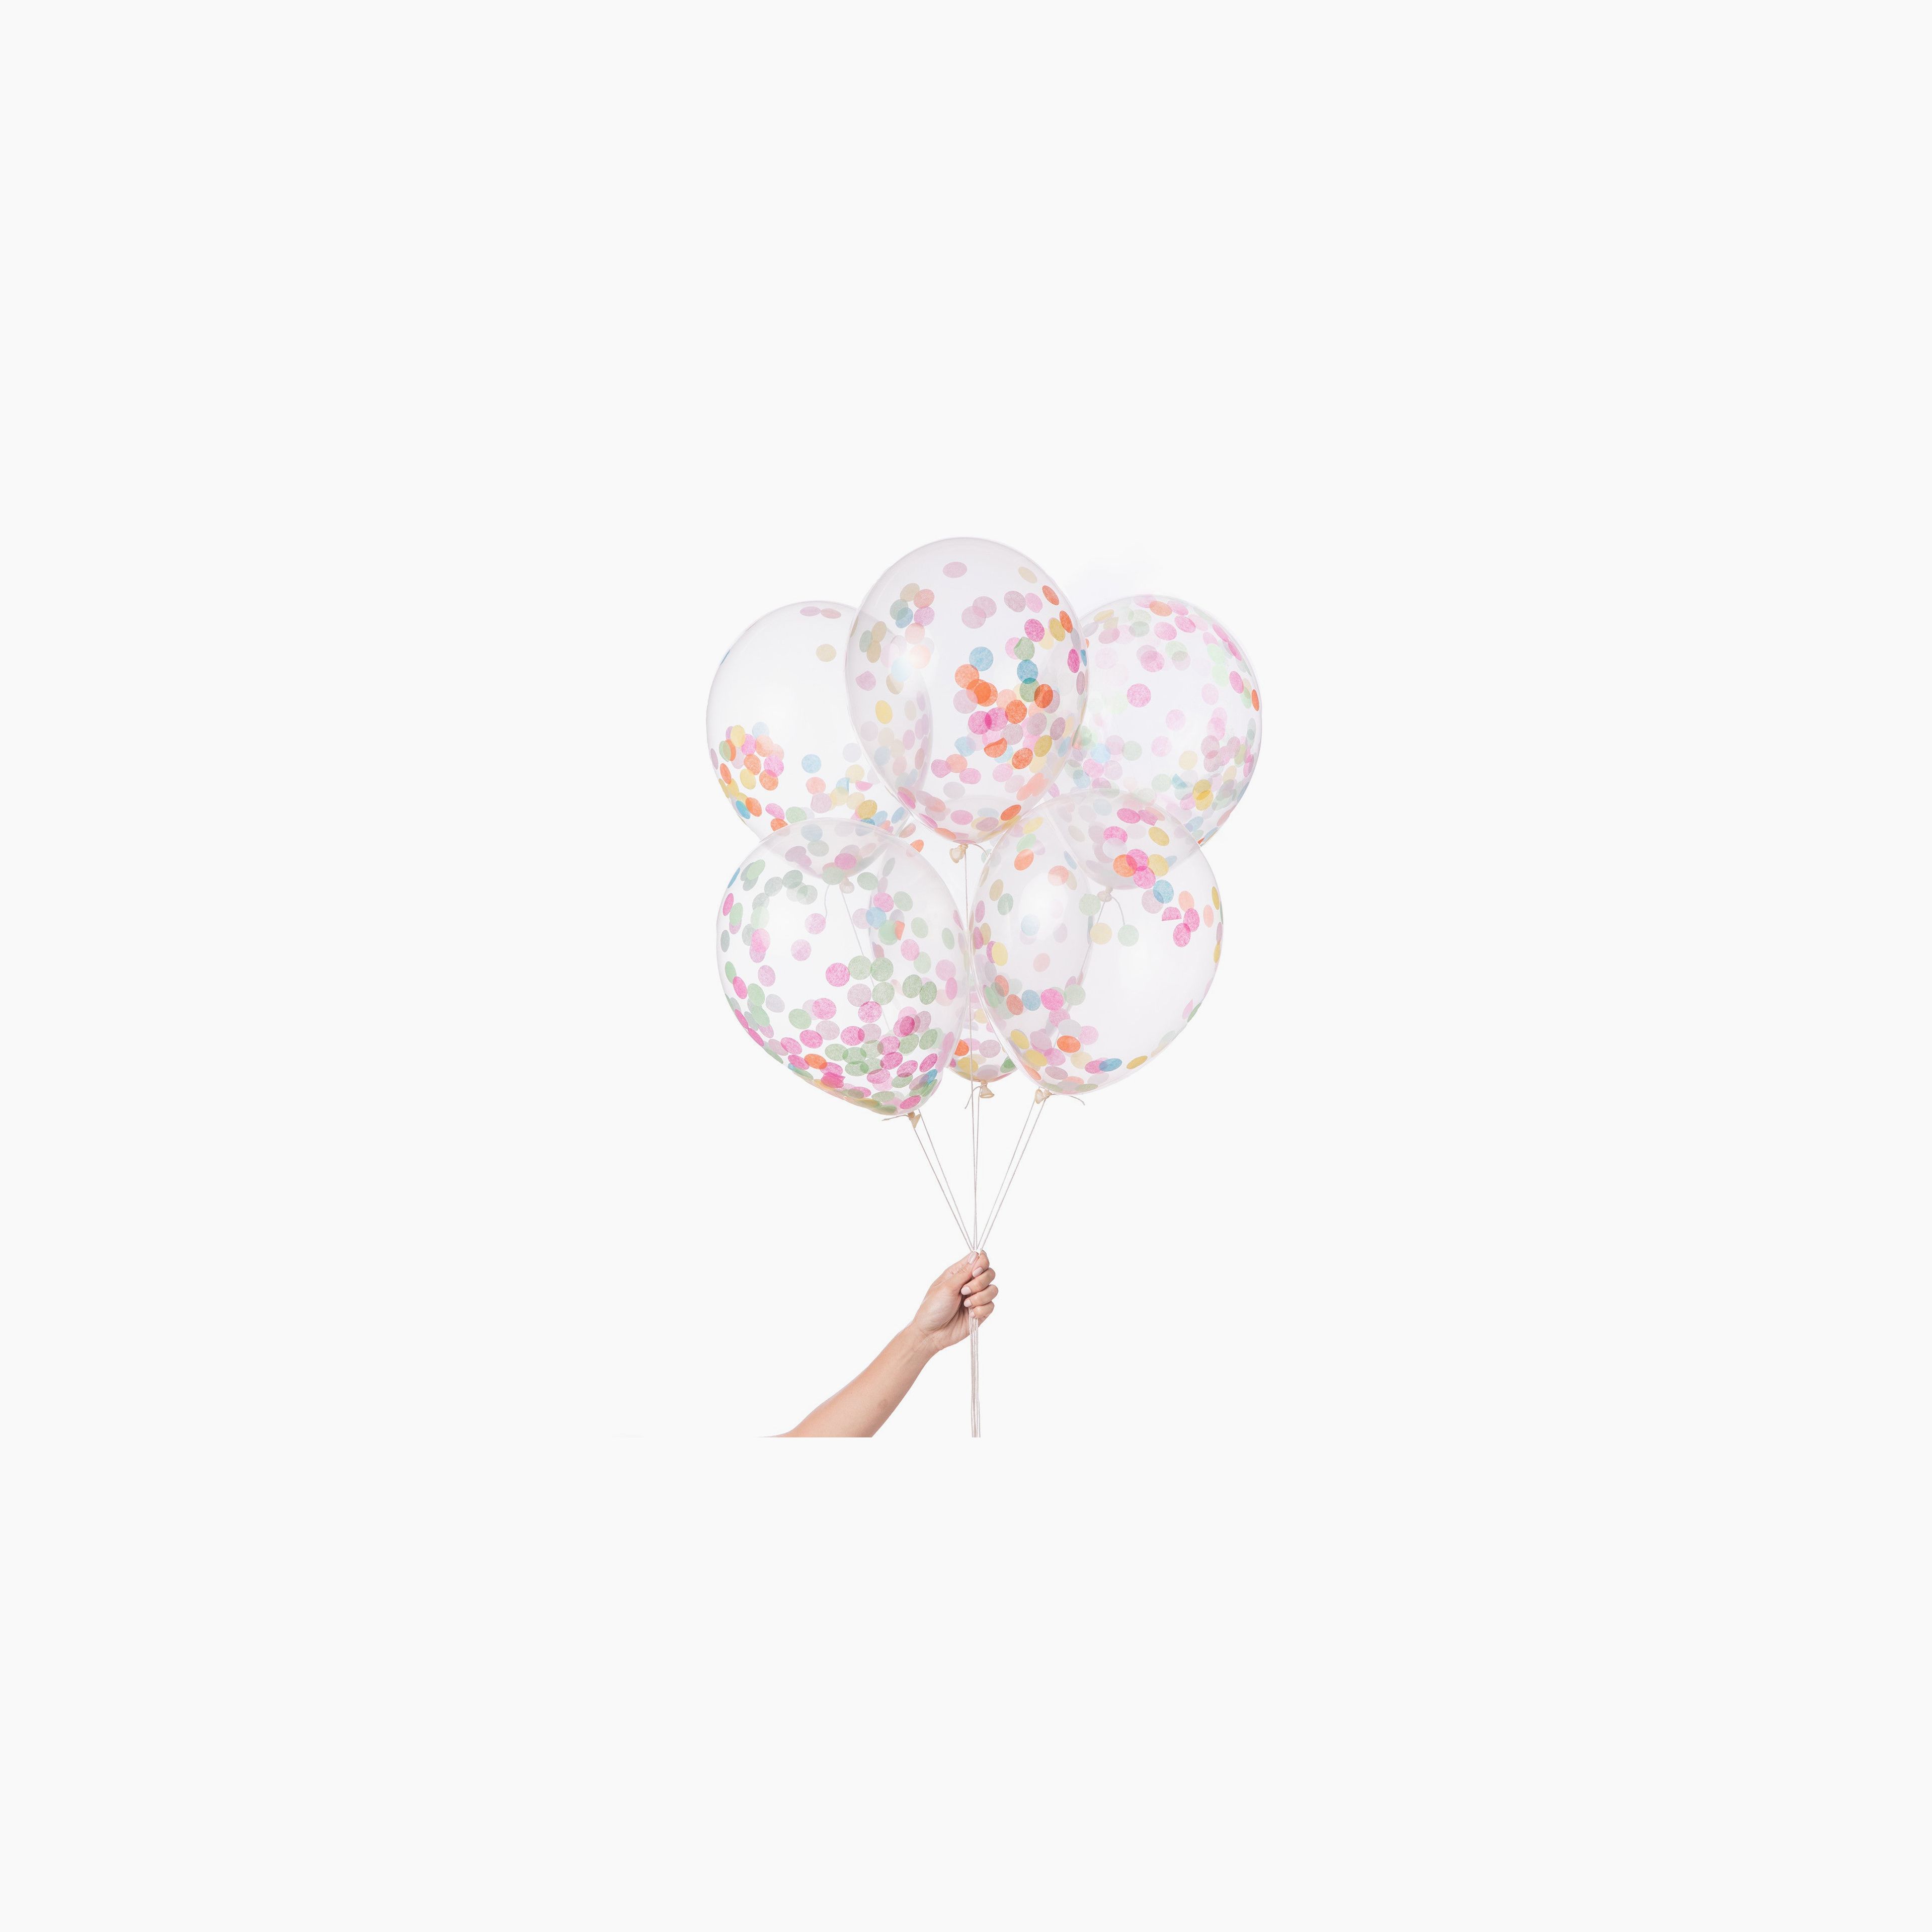 Pre-filled Confetti Balloons